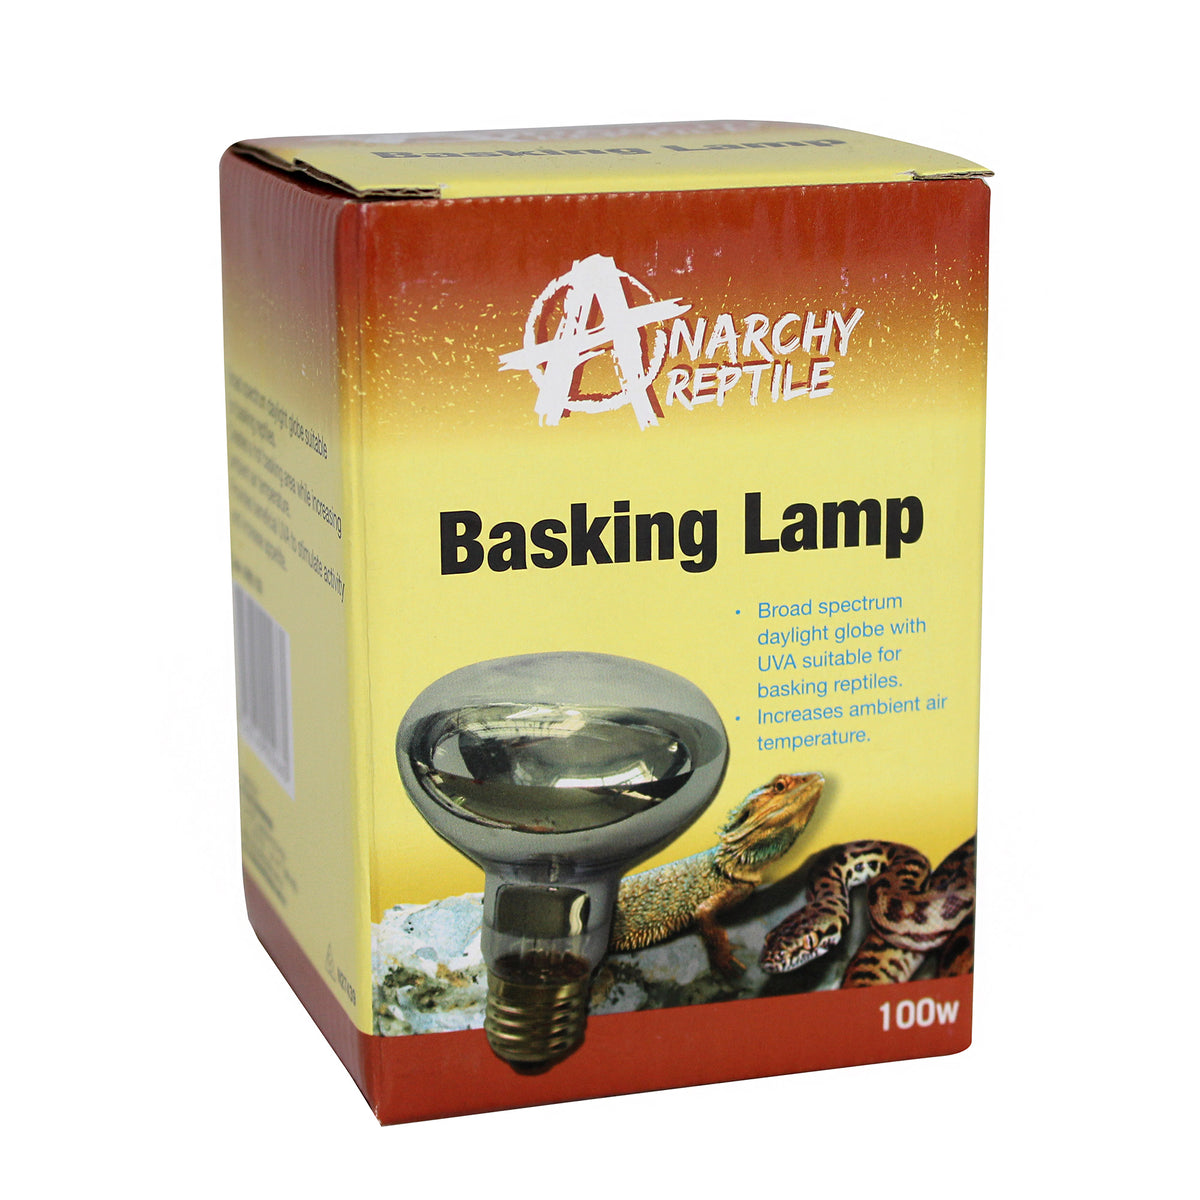 Anarchy Reptile Basking Lamp